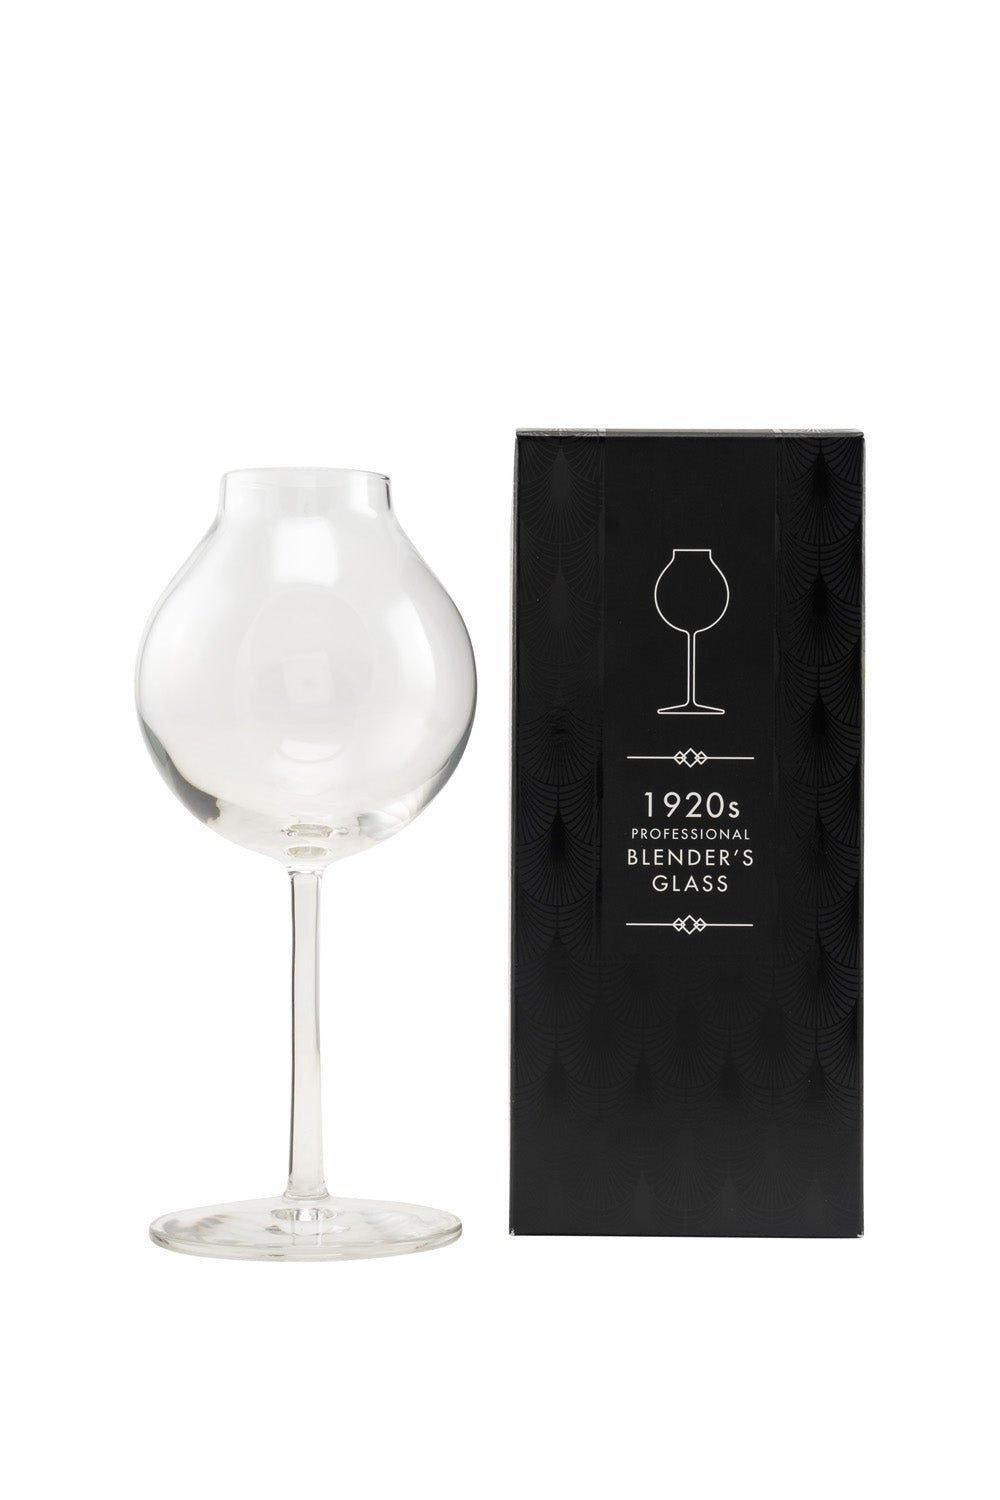 1920's Blenders Glass Profi Premium Whisky Nosing Glas - Maltimore